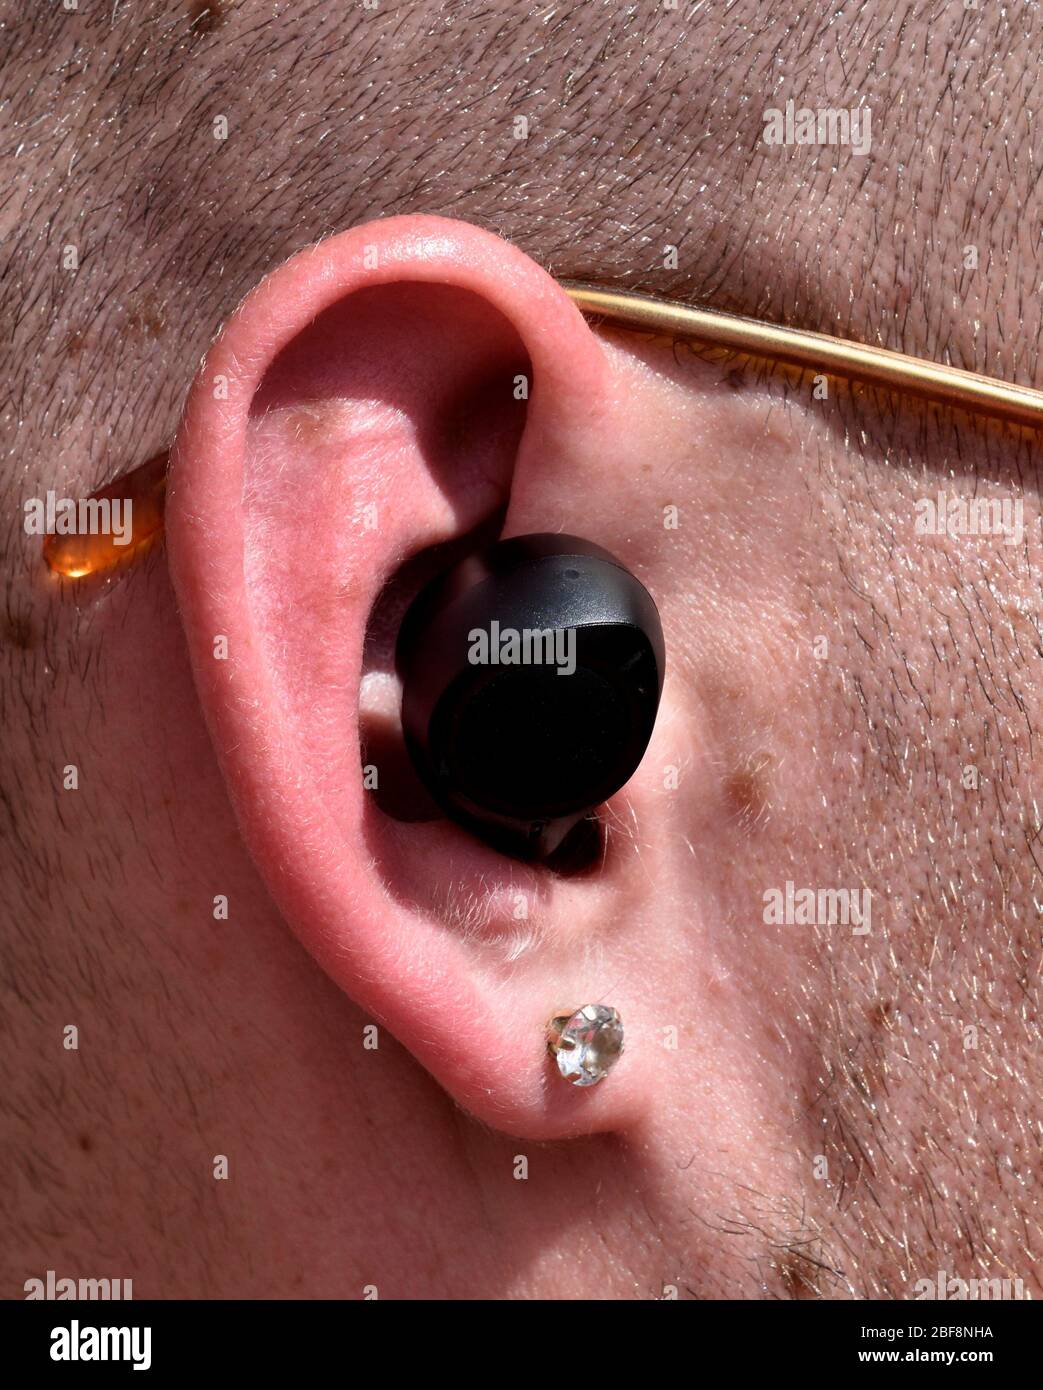 Bluetooth Wireless earpiece headphones Stock Photo